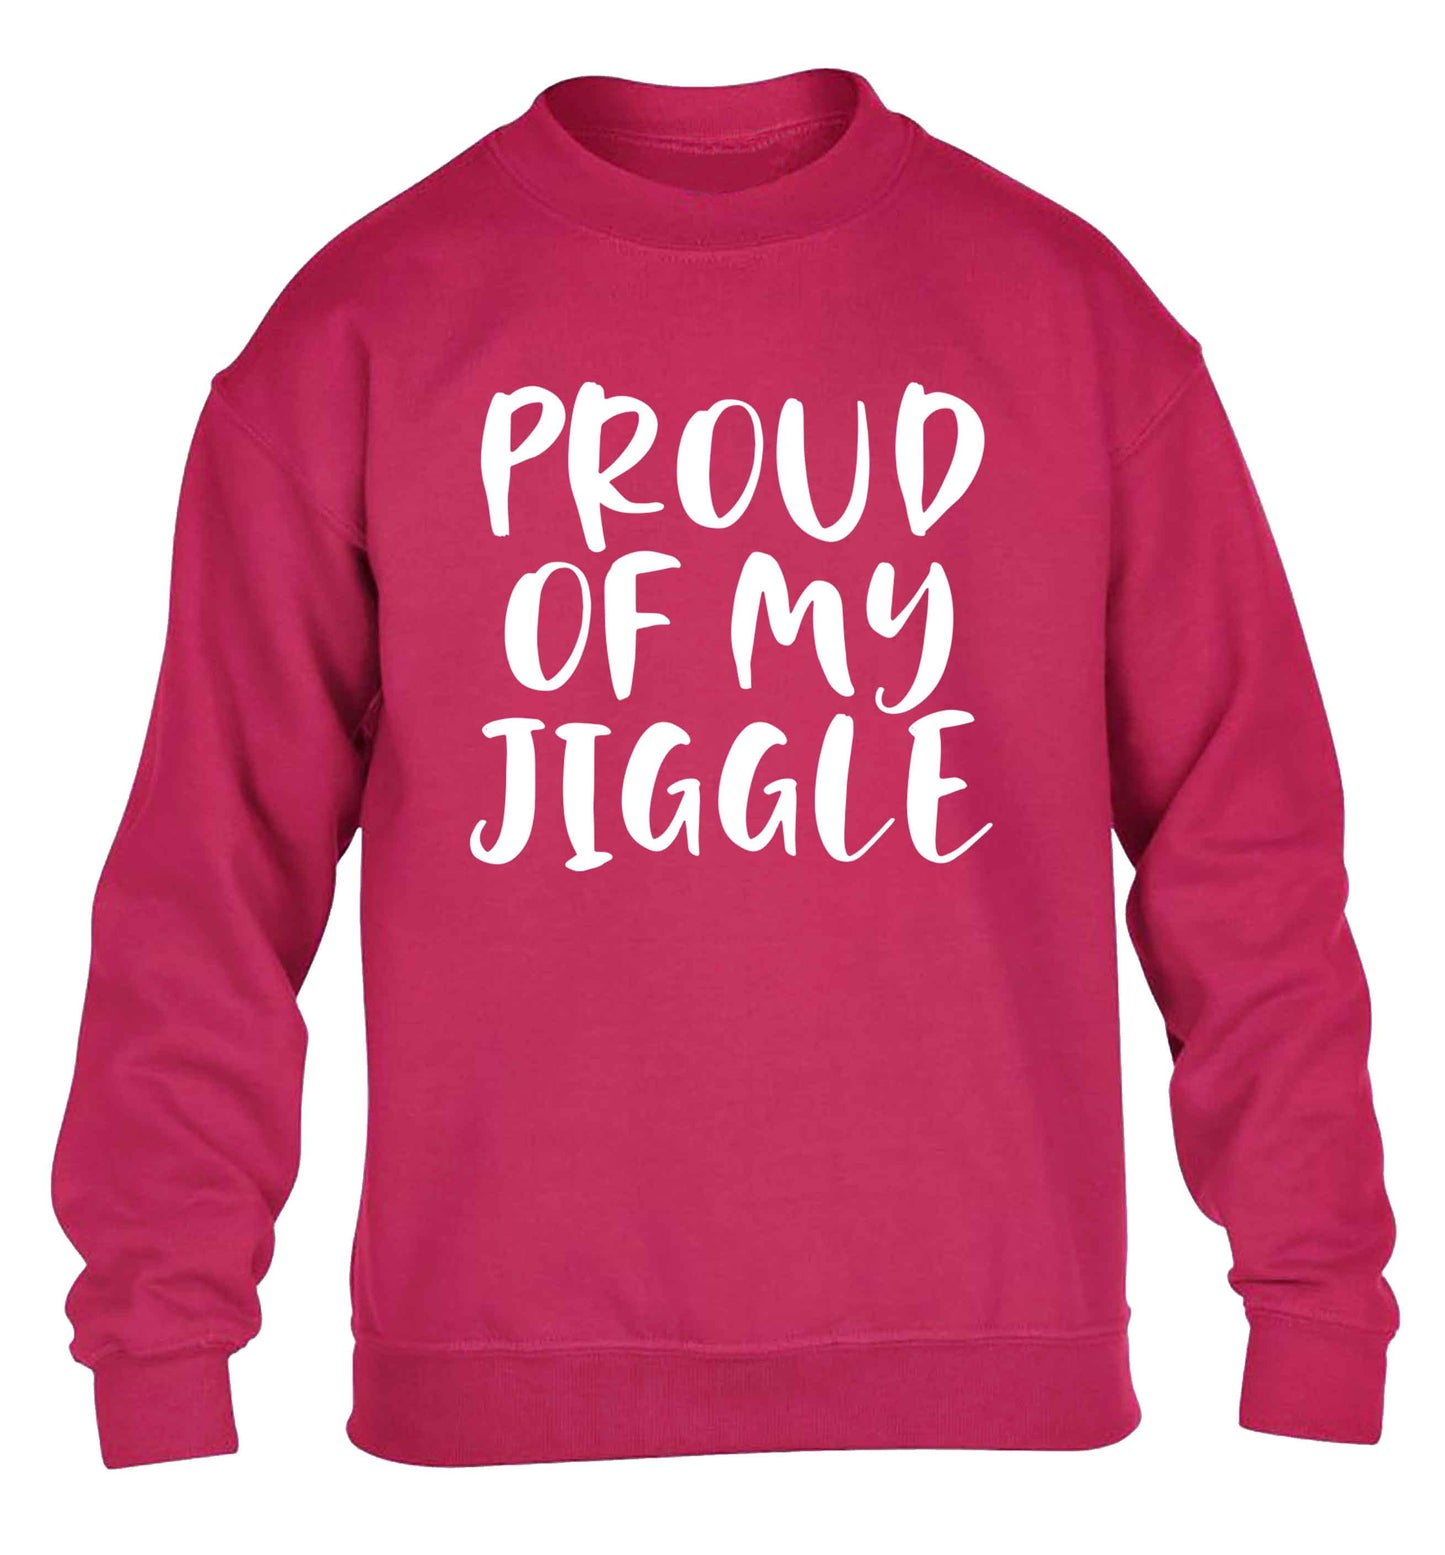 Proud of my jiggle children's pink sweater 12-13 Years